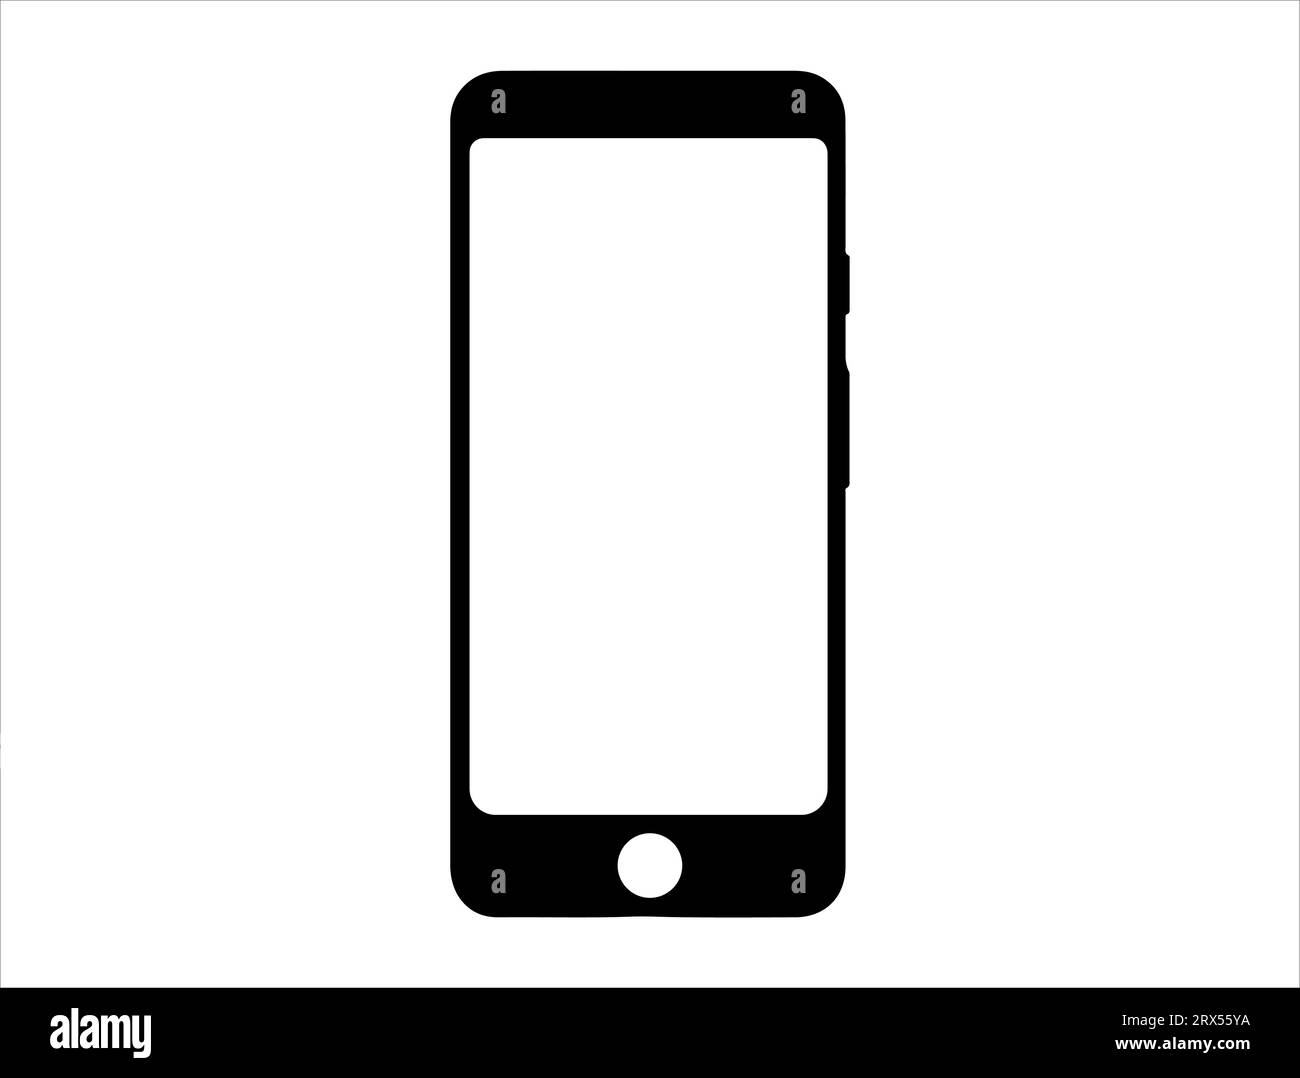 Phone icon silhouette vector art white background Stock Vector